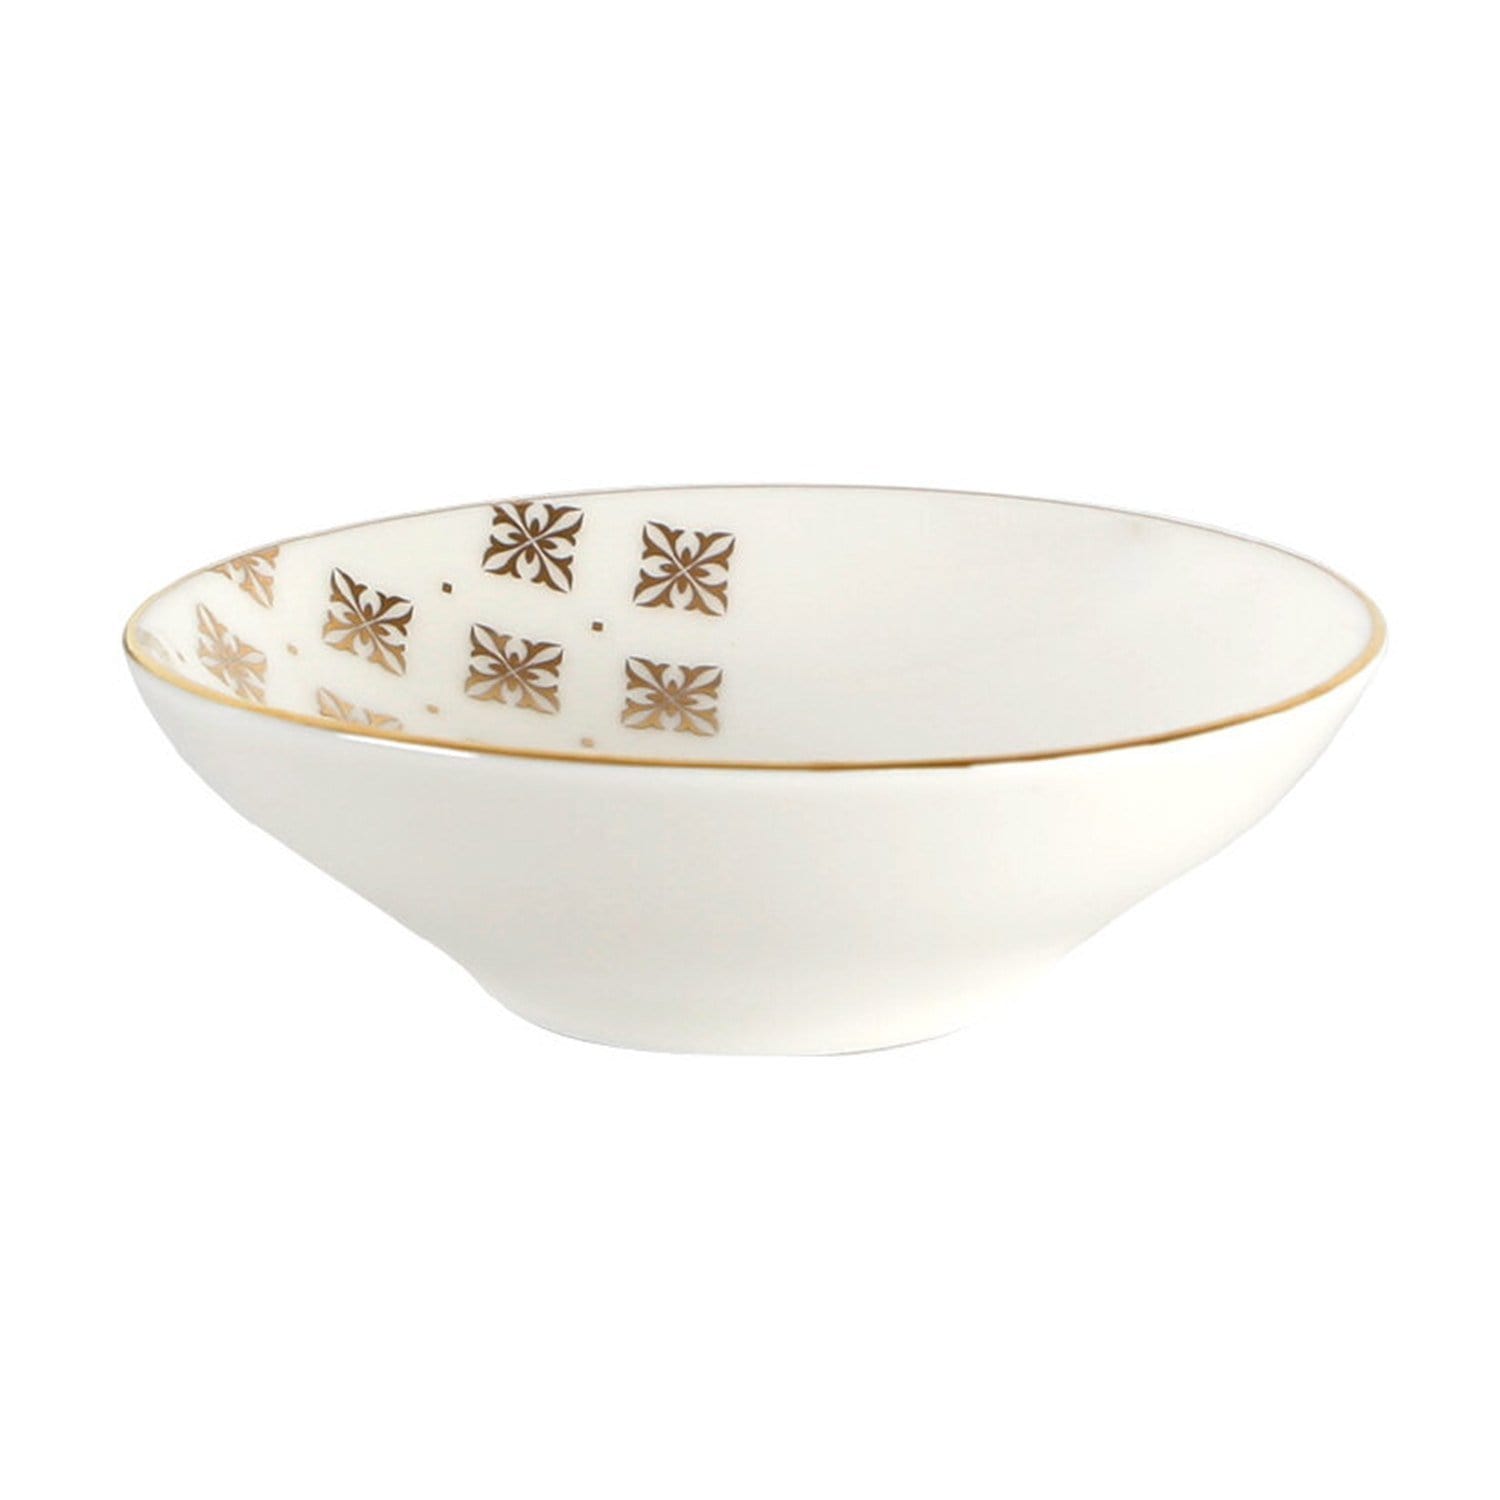 Porland Porselen Evoke 12 cm Bowl - Cream and Gold - 04ALM002716 - Jashanmal Home